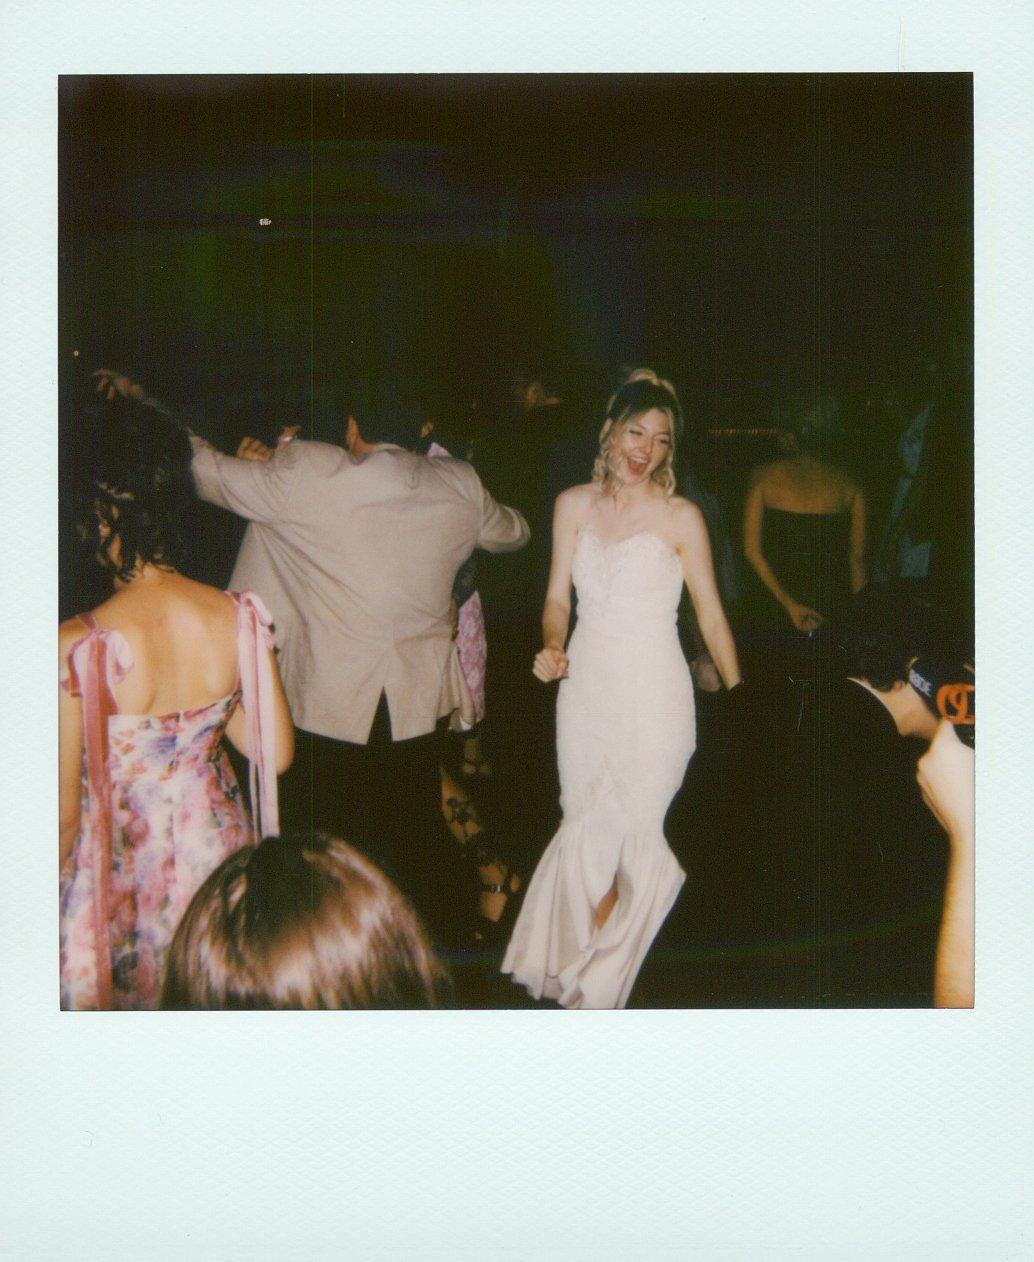 Wedding-taken-on-polaroids4.jpg